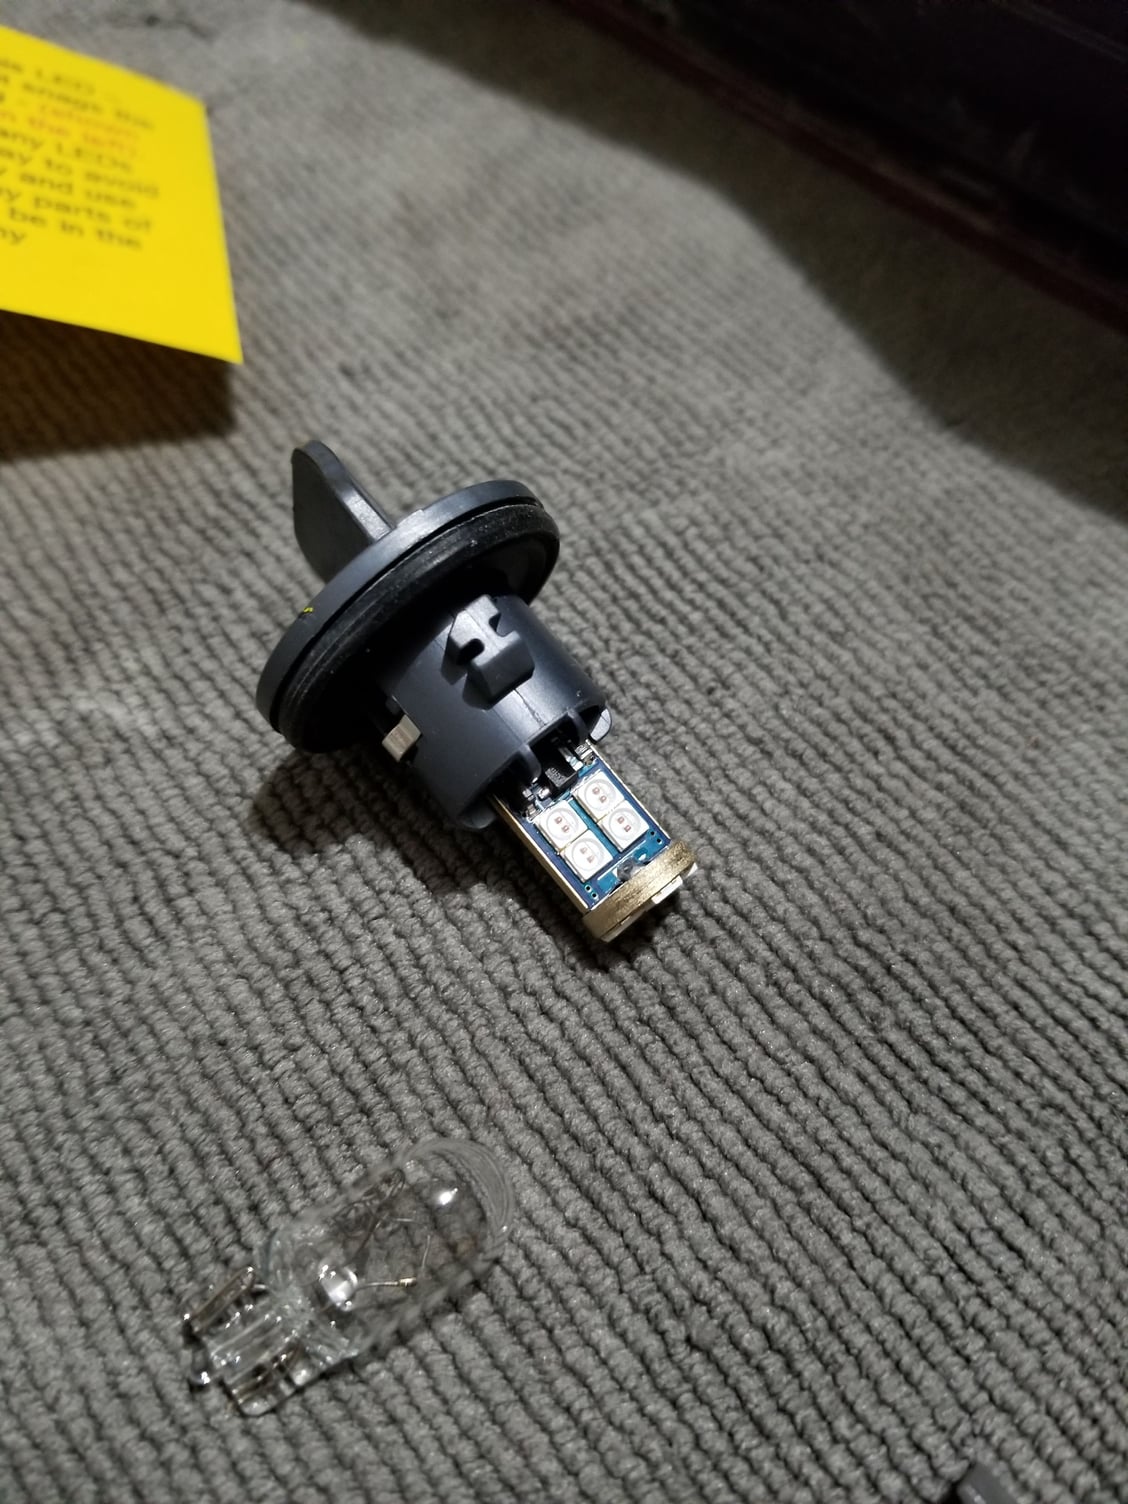 2018 Q5 reverse bulbs - Page 11 - AudiWorld Forums 2018 Audi Q5 Reverse Light Bulb Replacement